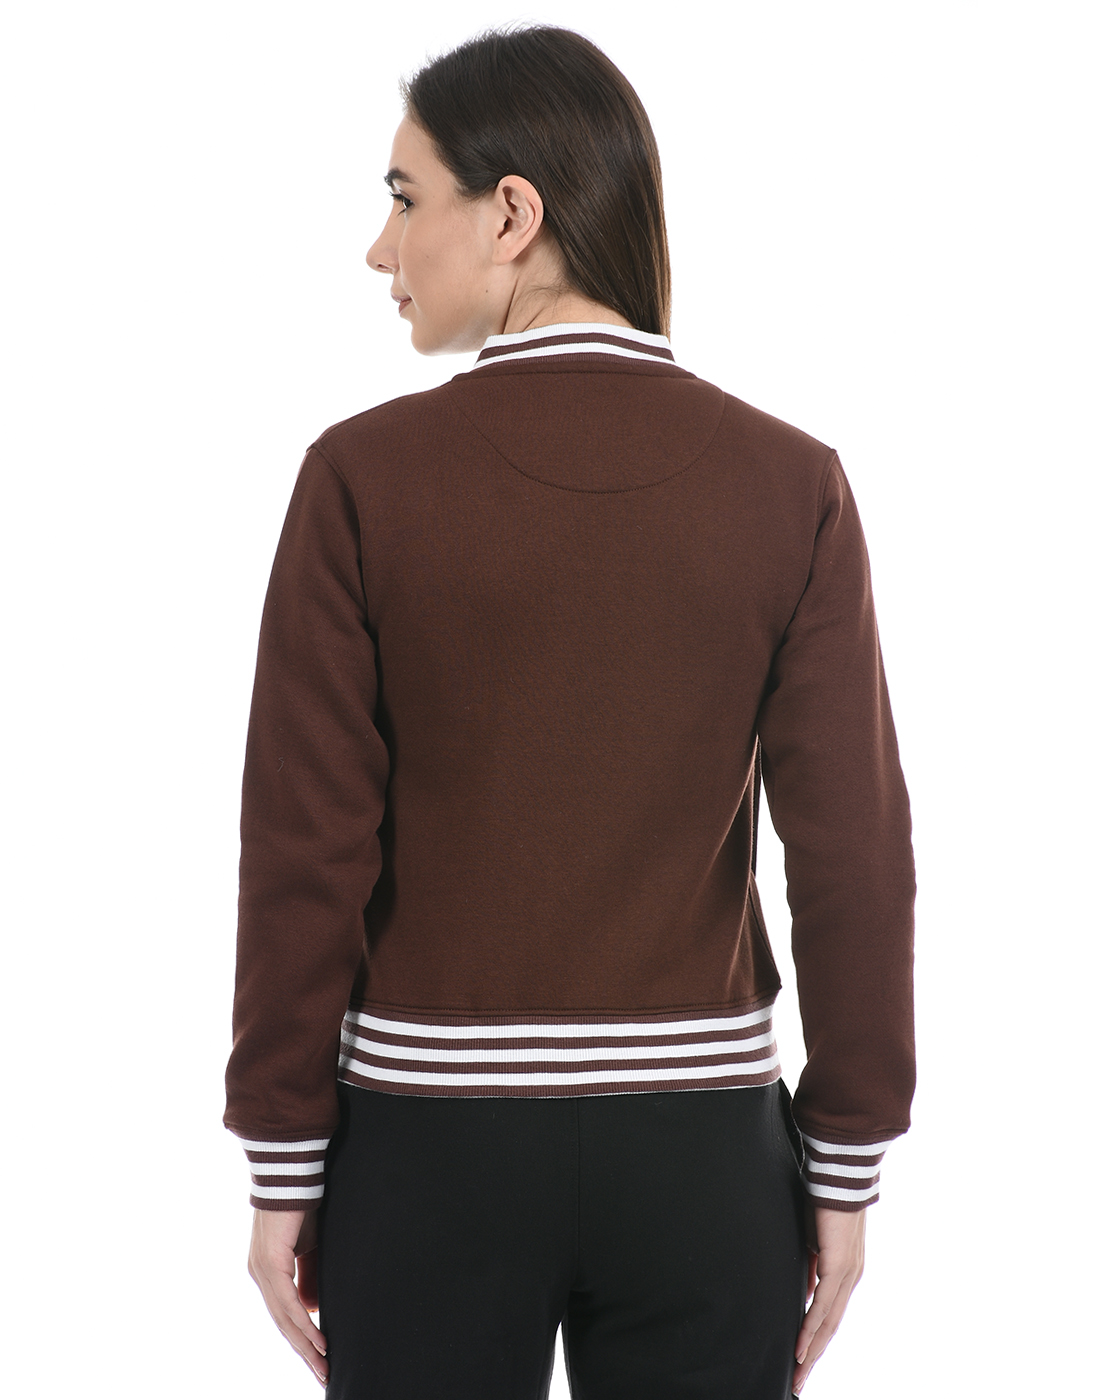 Oneway Women Striped Brown Jacket